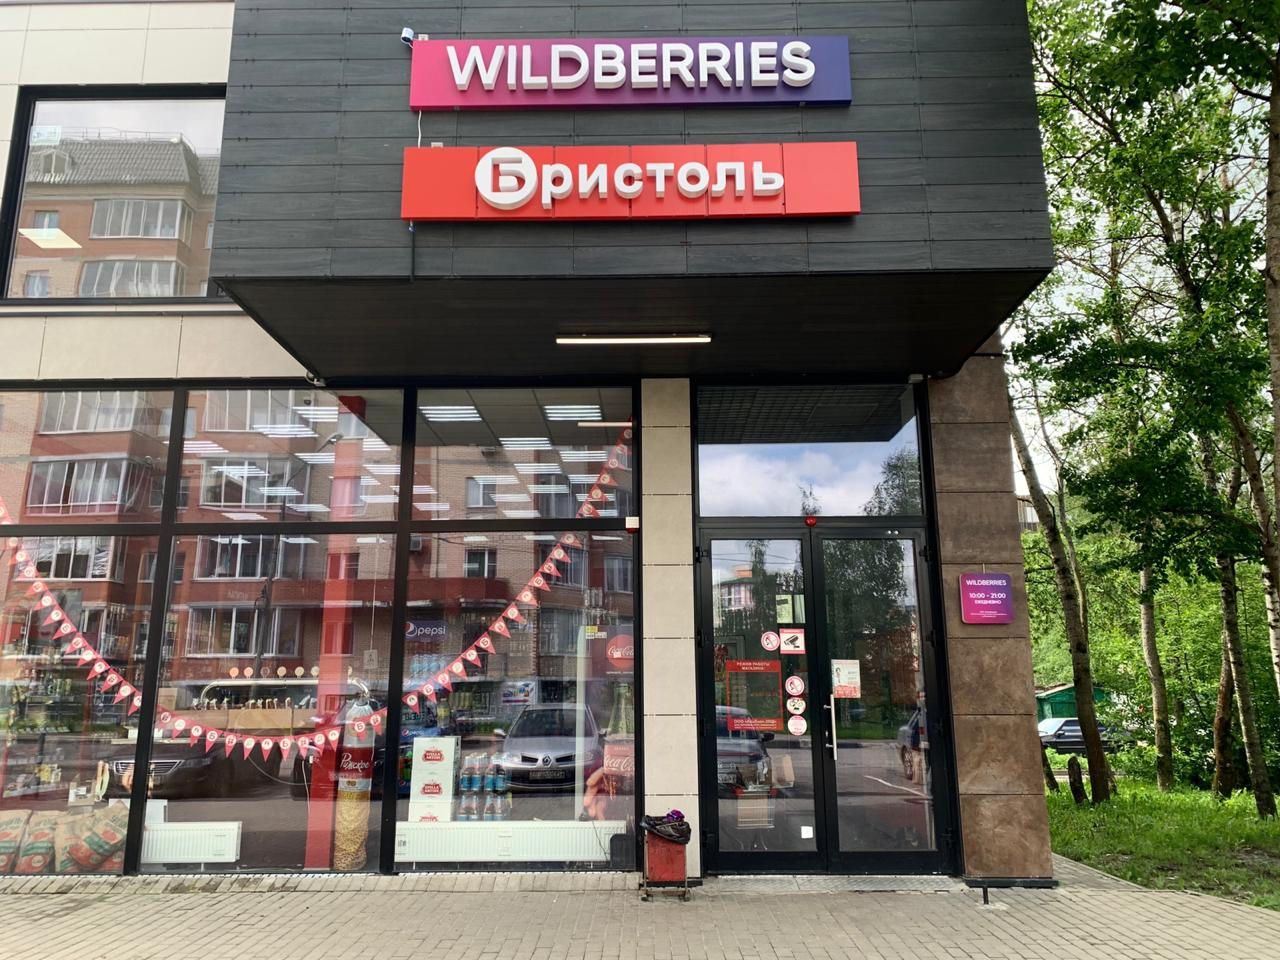 Https portal wildberries ru. Wildberries портал для сотрудников. Вайлберис купить.